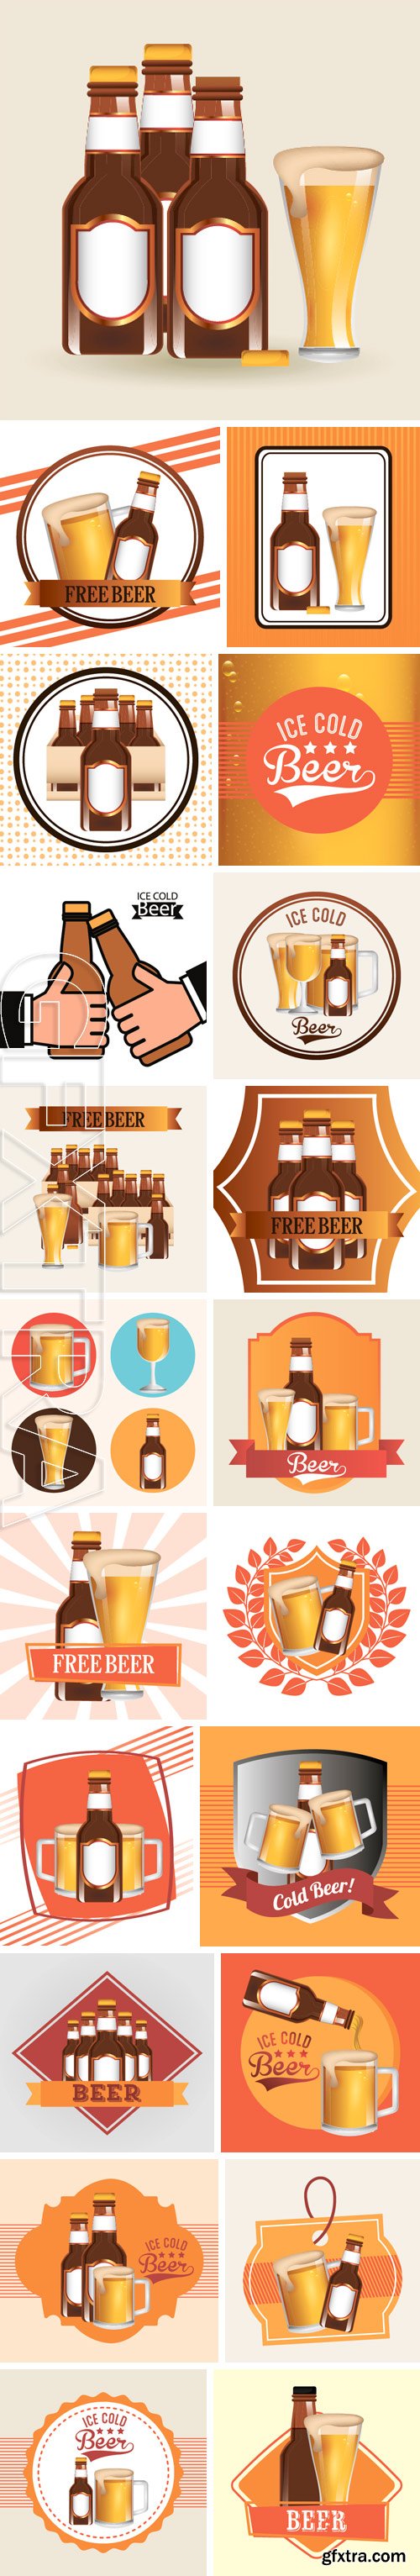 Stock Vectors - Cold beer design, vector illustration graphic